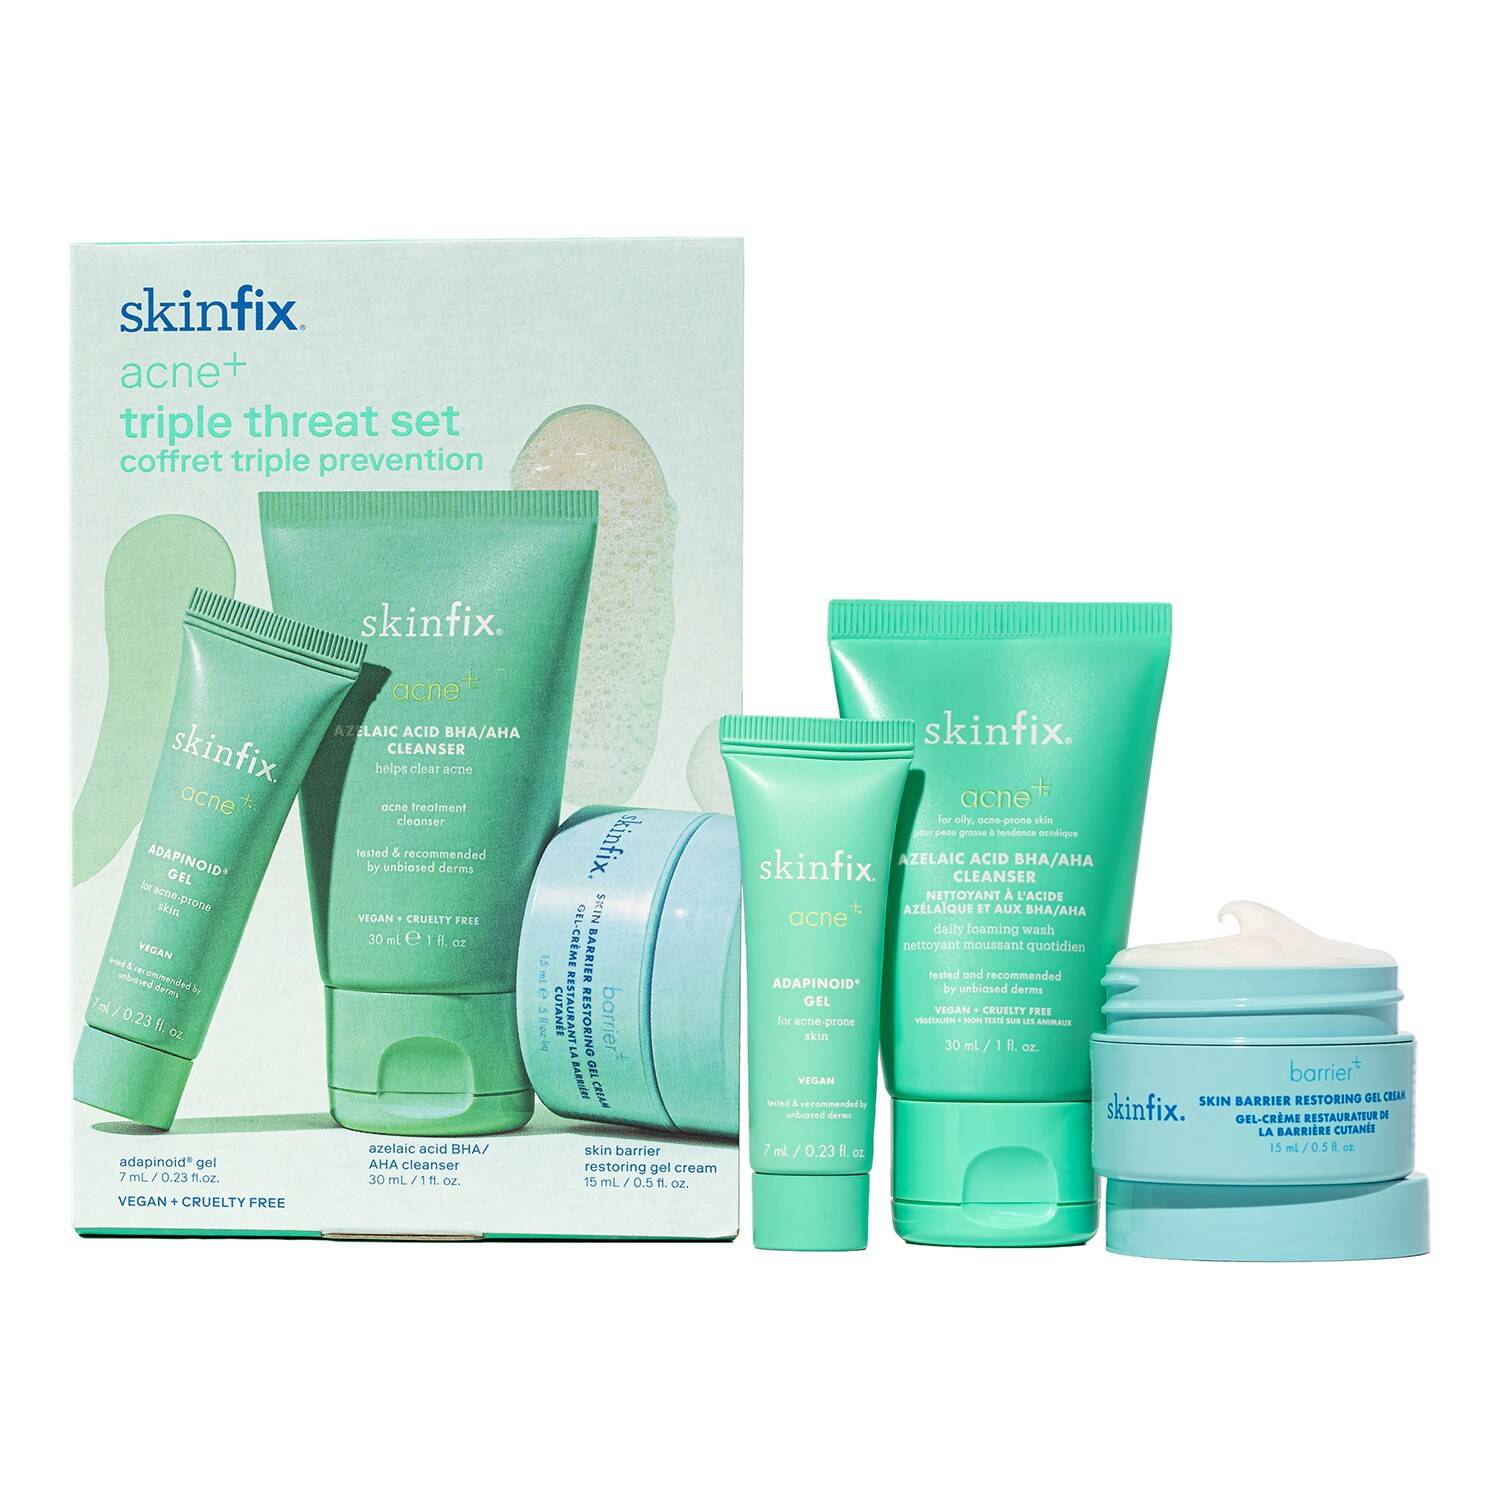 Skinfix Acne+ Triple Threat Kit